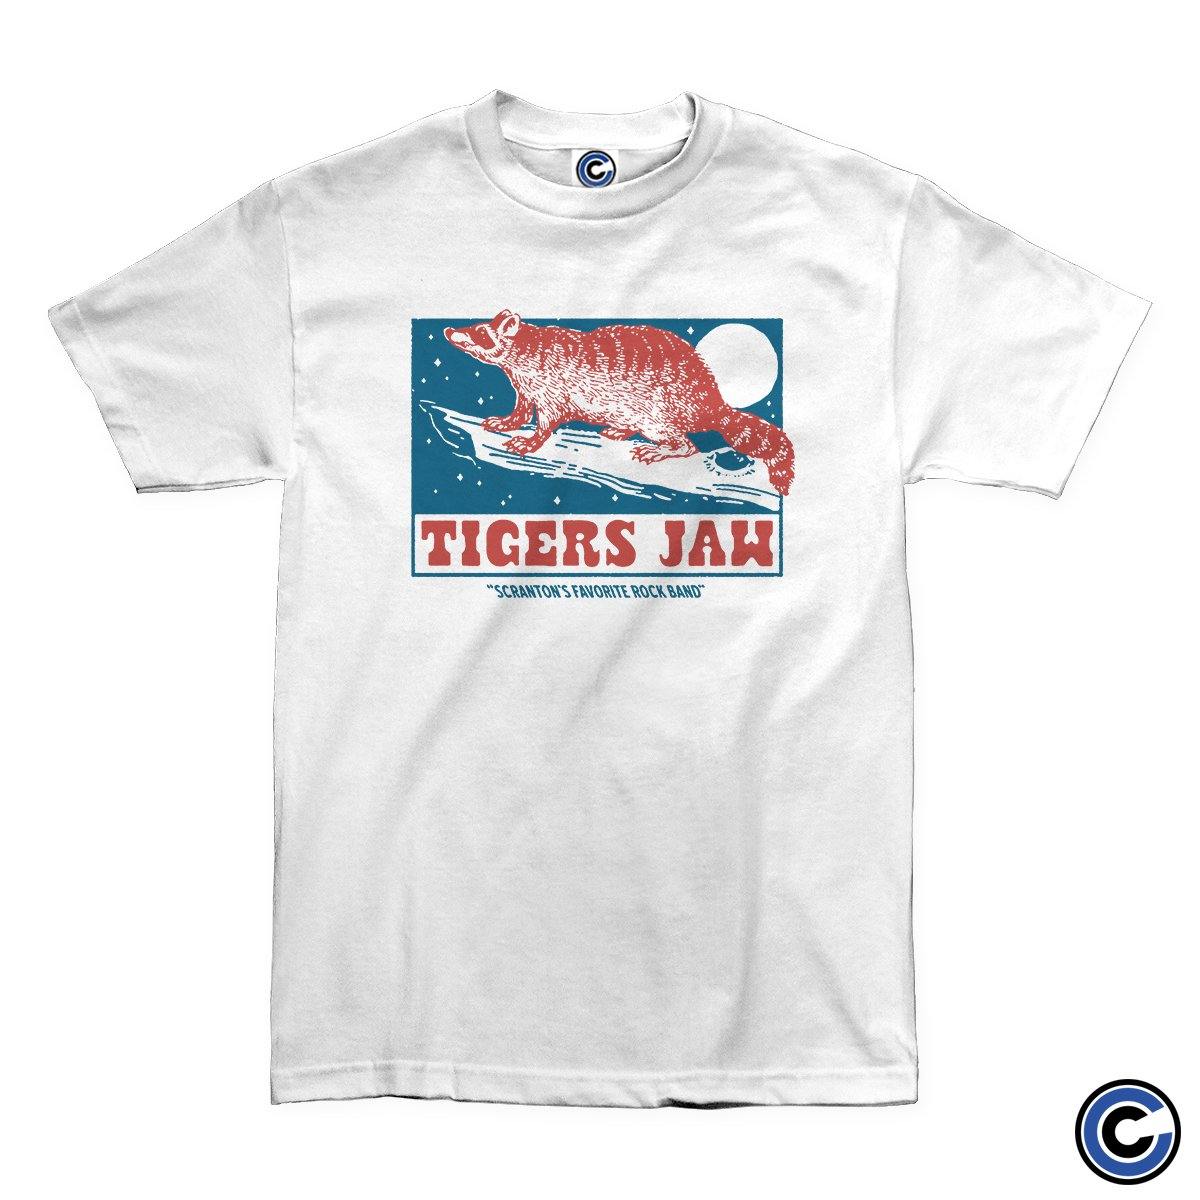 Buy – Tigers Jaw "Raccoon" Shirt – Band & Music Merch – Cold Cuts Merch